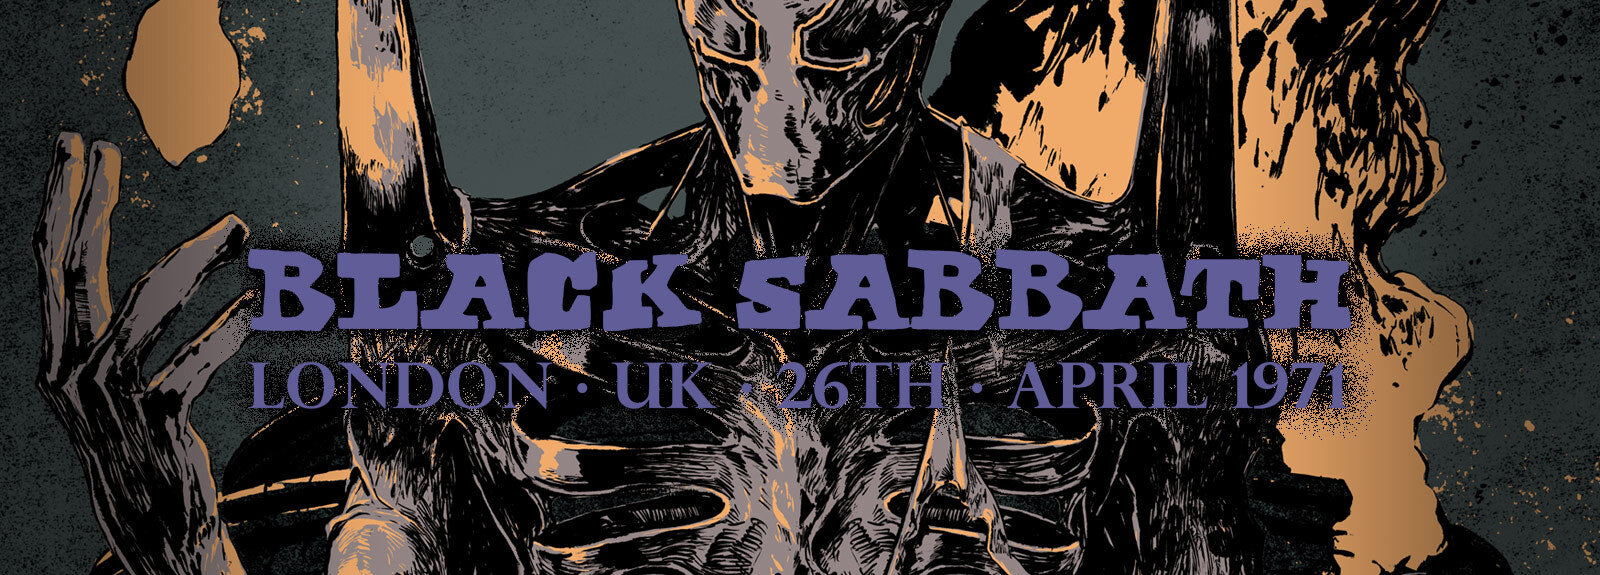 Black Sabbath London 1971